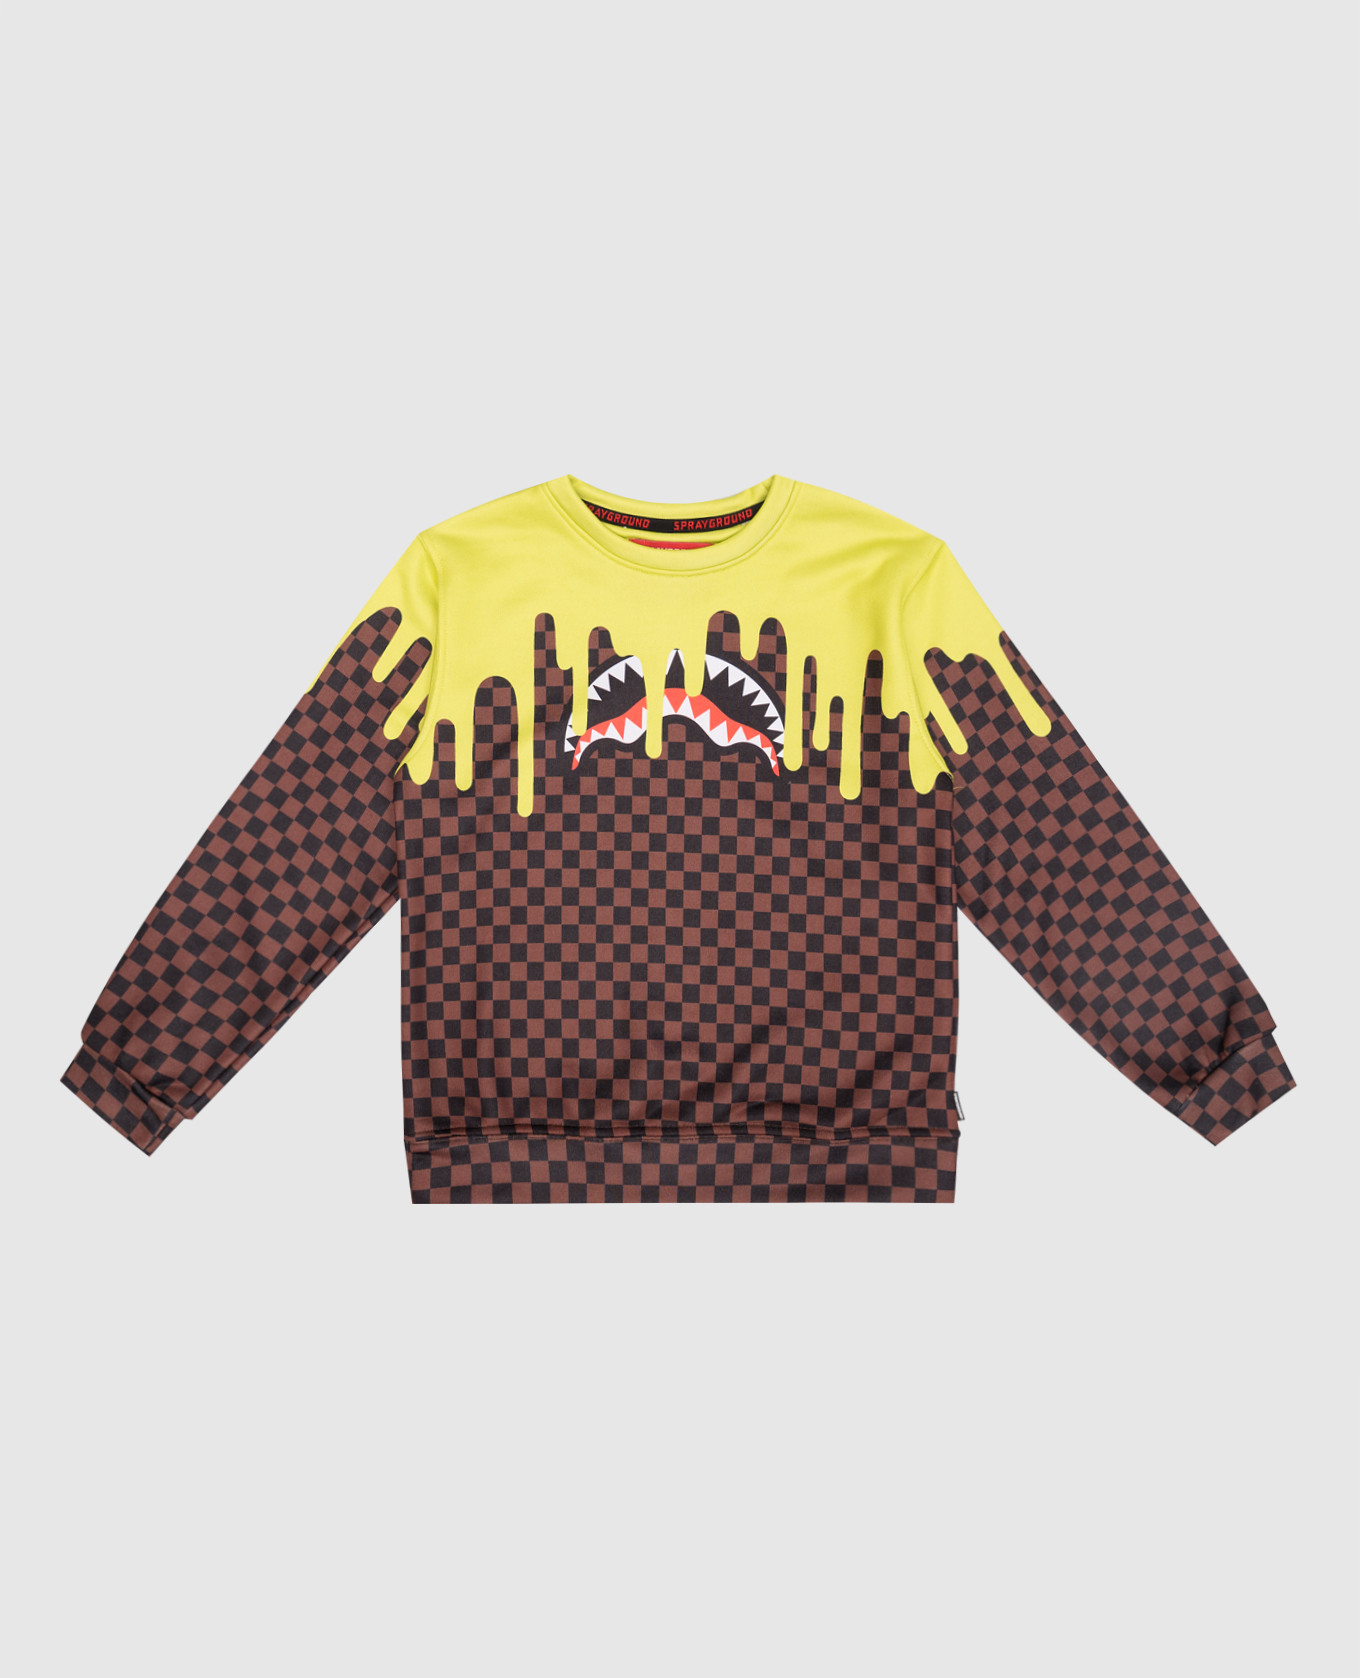 Children's sweatshirt in Color dripping check crew print